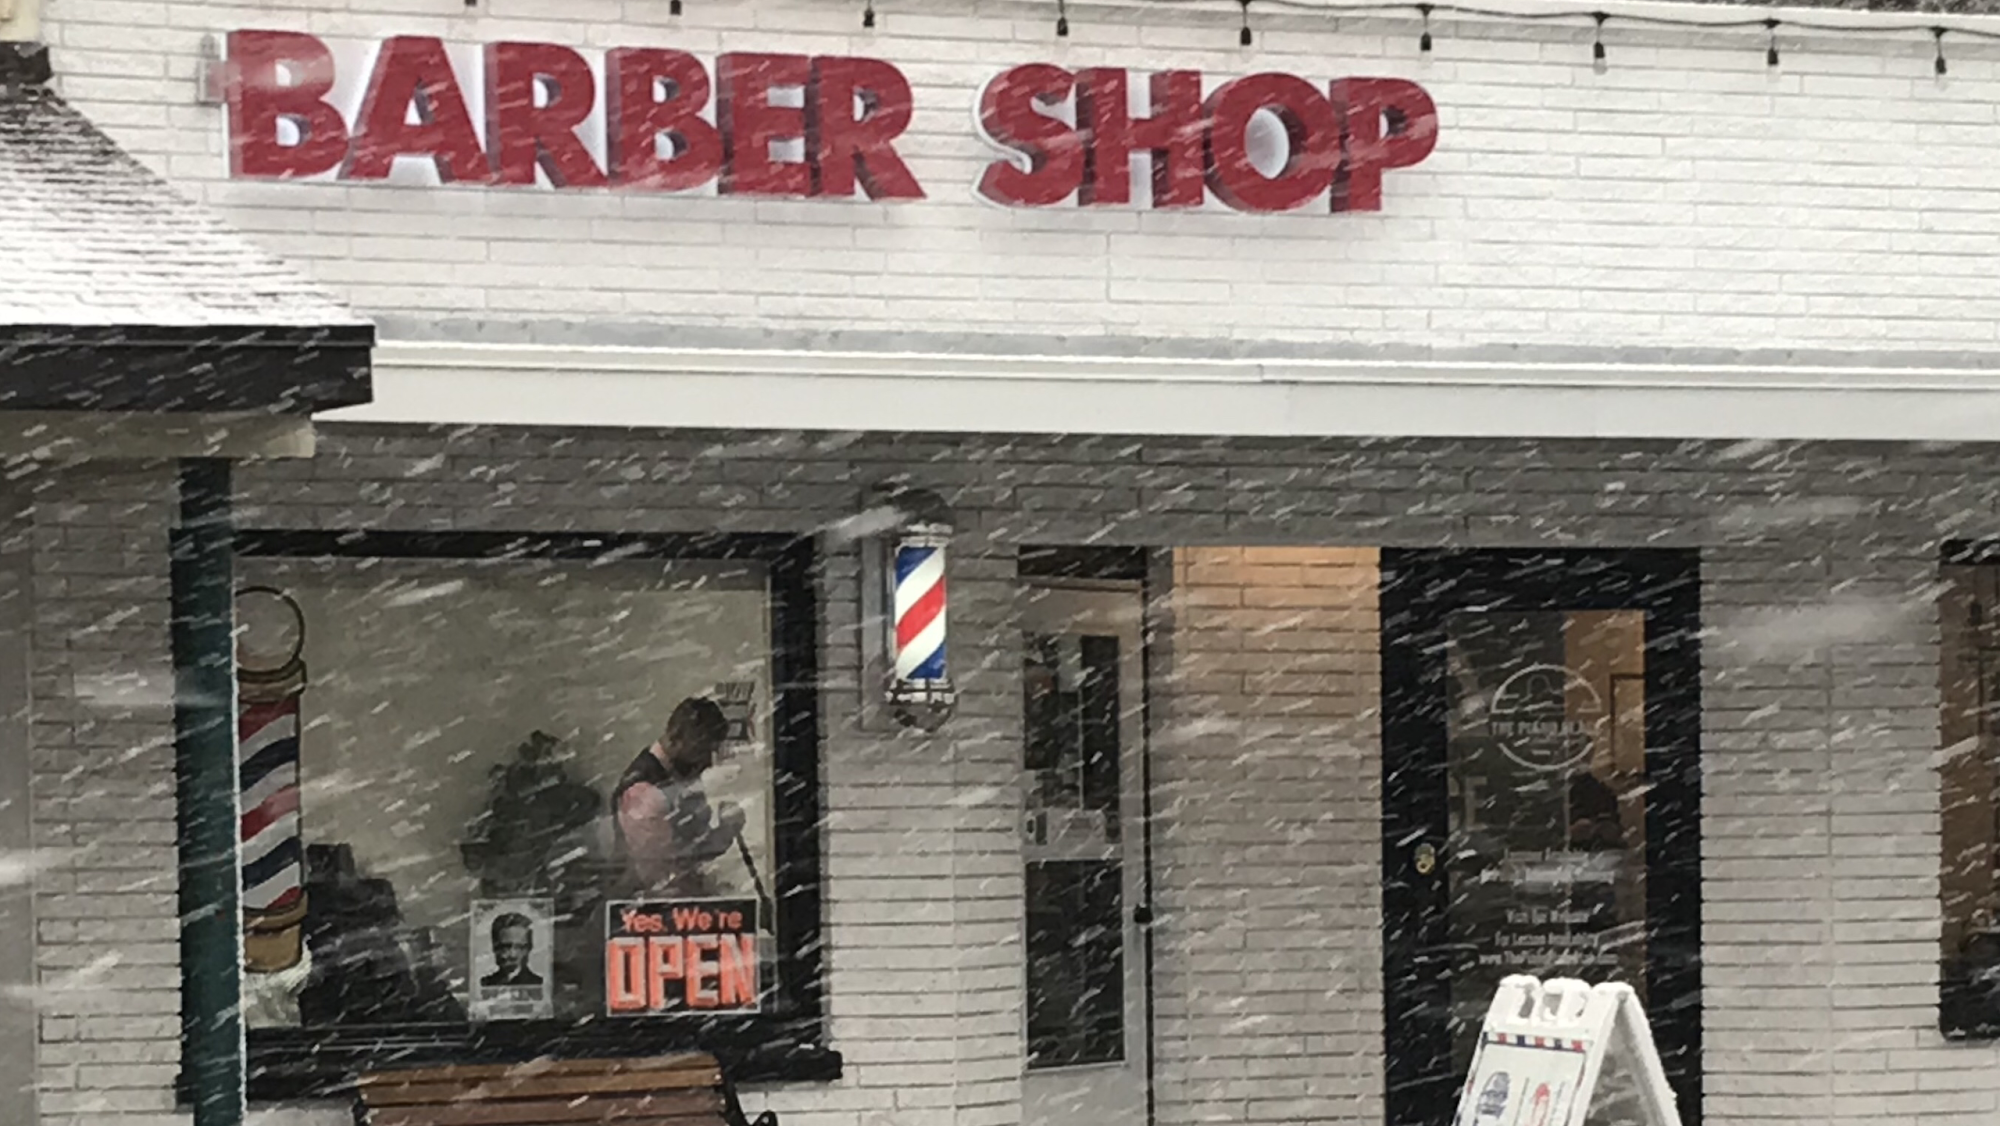 Dave's Barber Shop of Draper